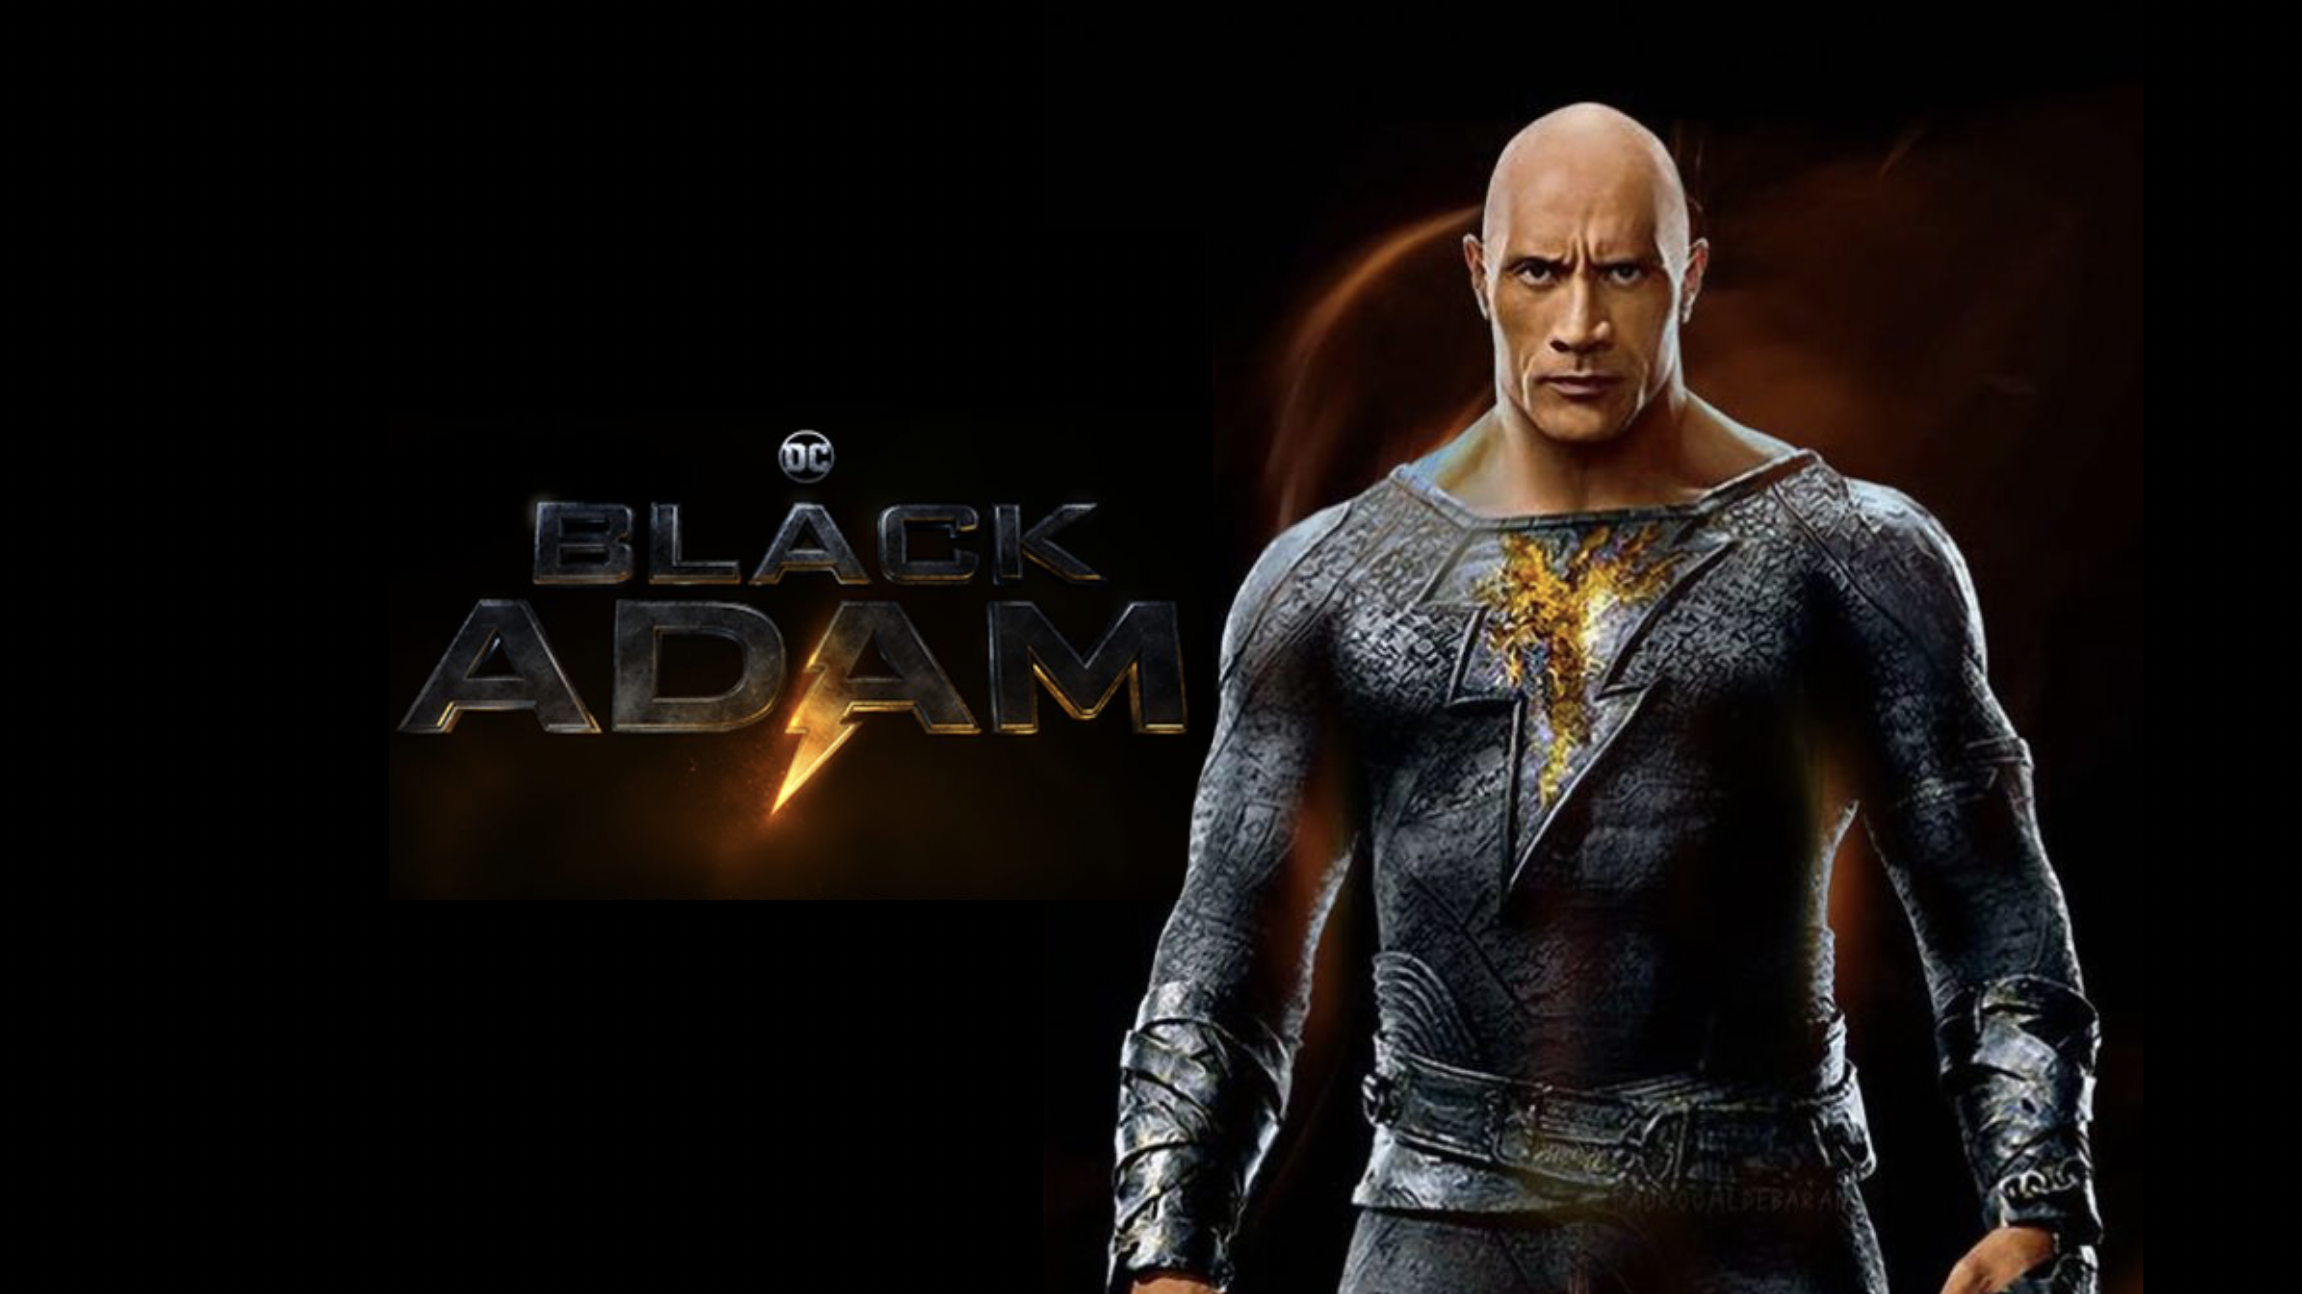 Black Adam Star Breaks Silence After Dwayne Johnson's DC Exit